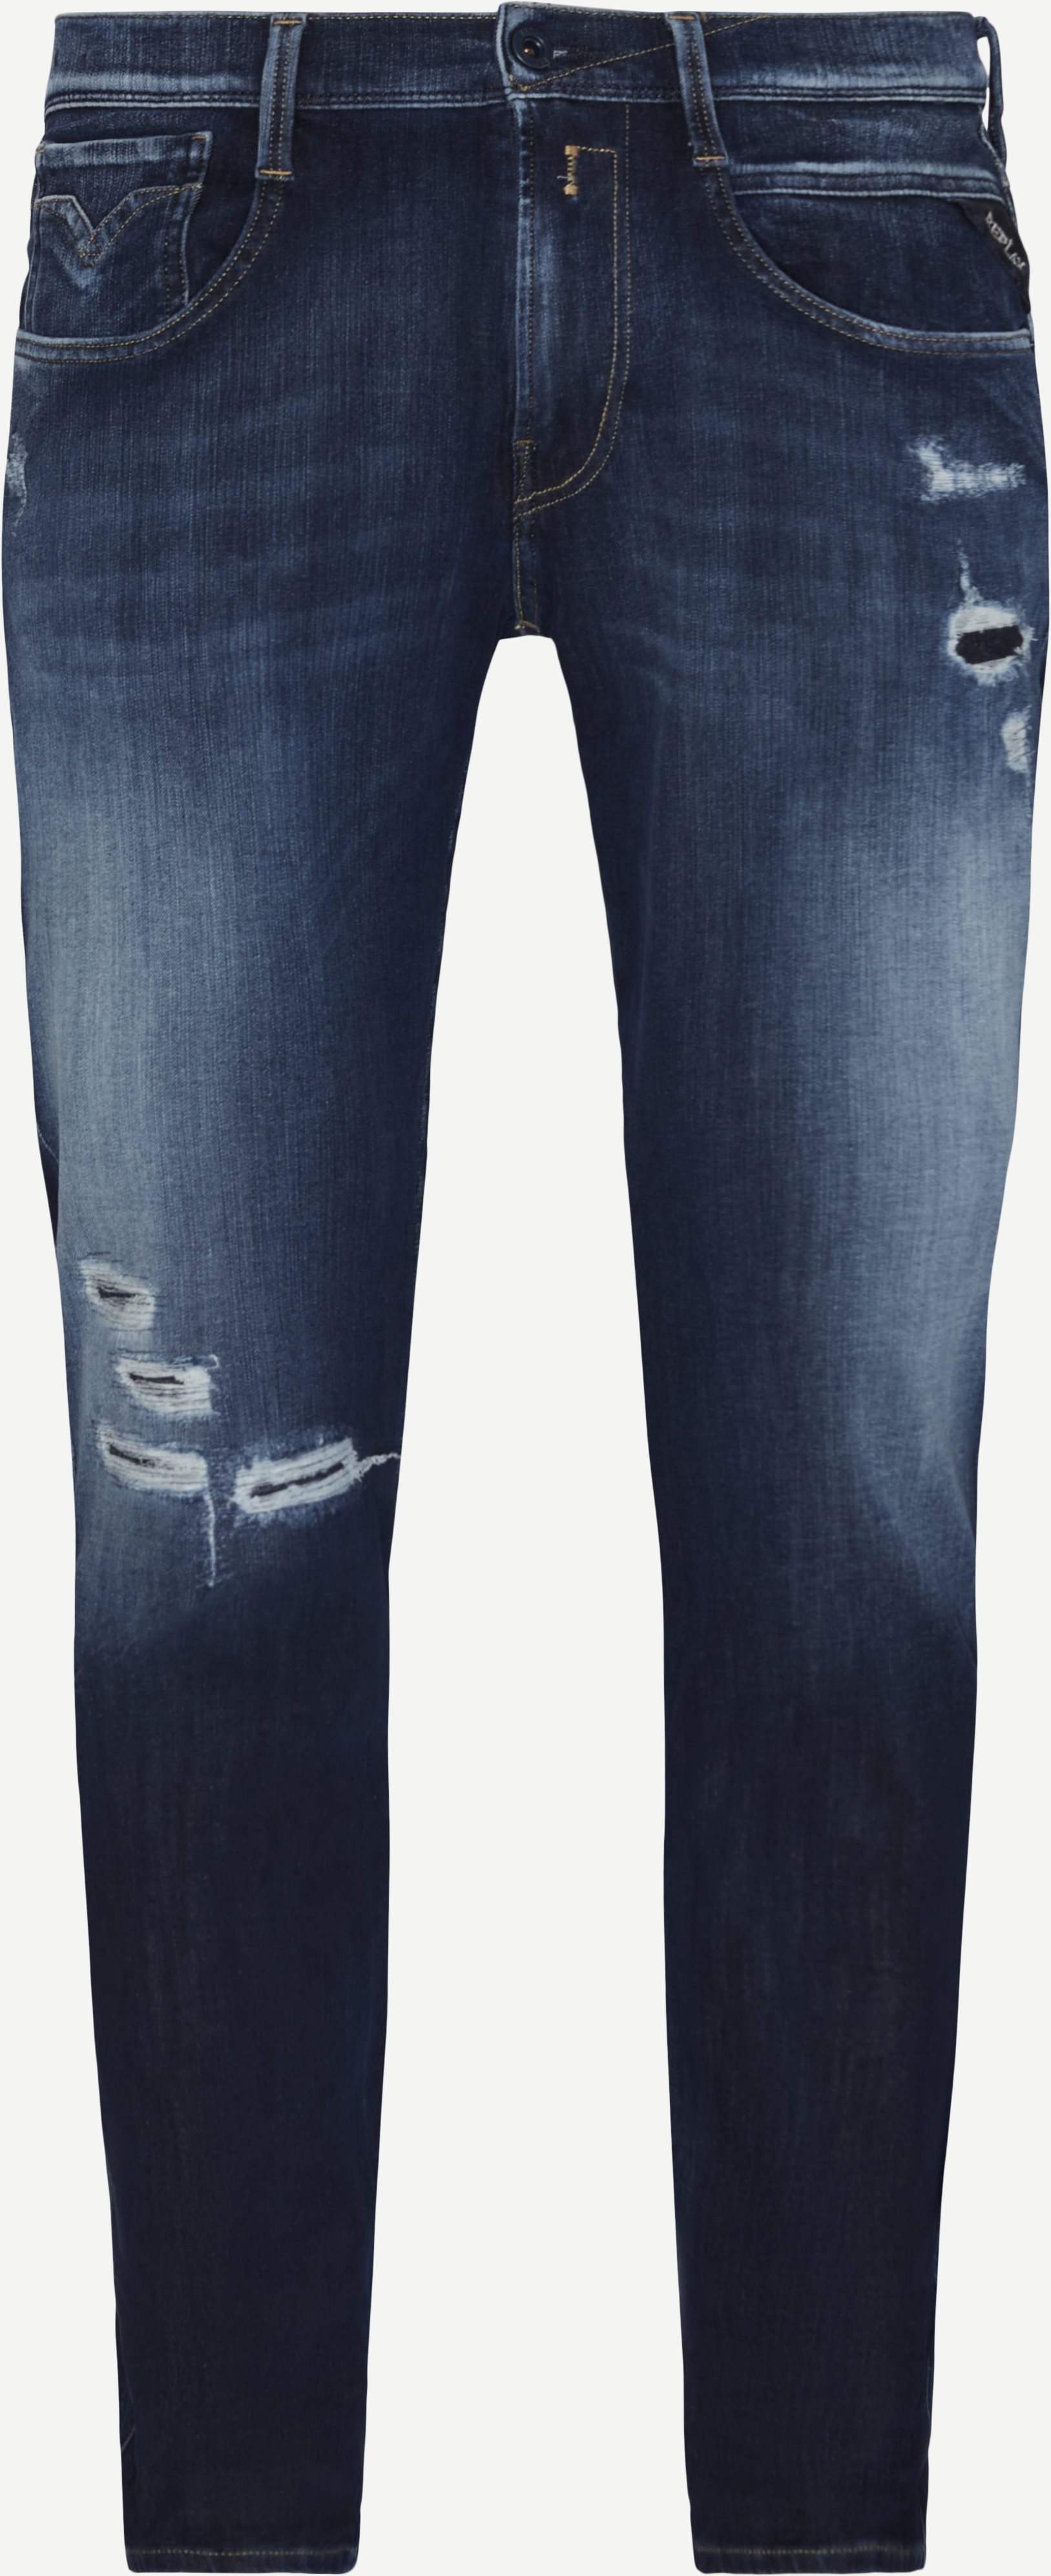 Anbass Hyperflex Jeans - Jeans - Slim fit - Blå